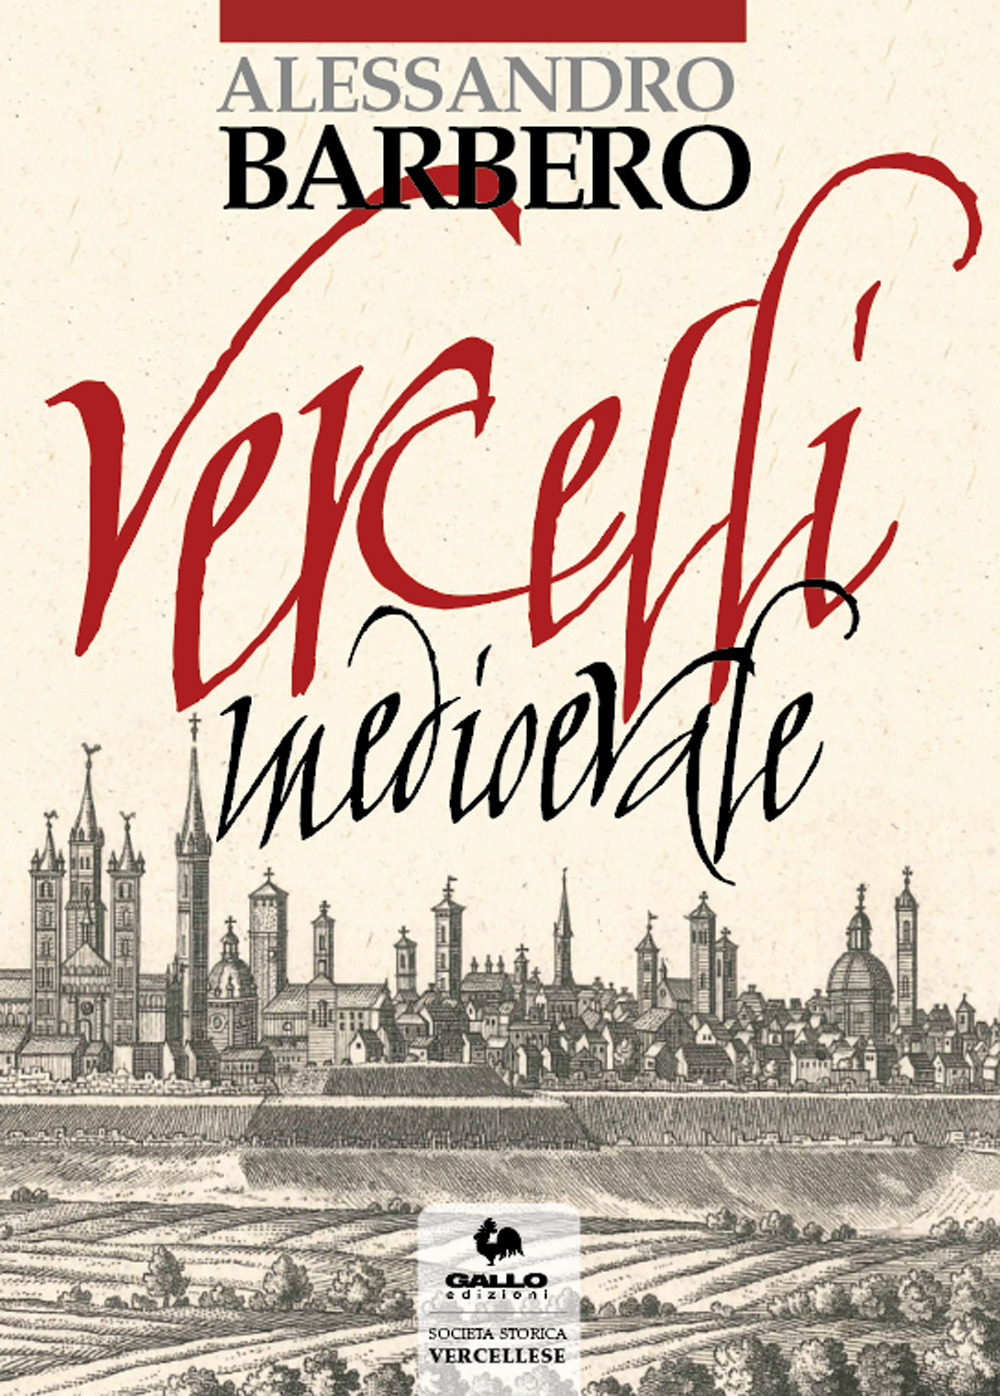 Vercelli medievale